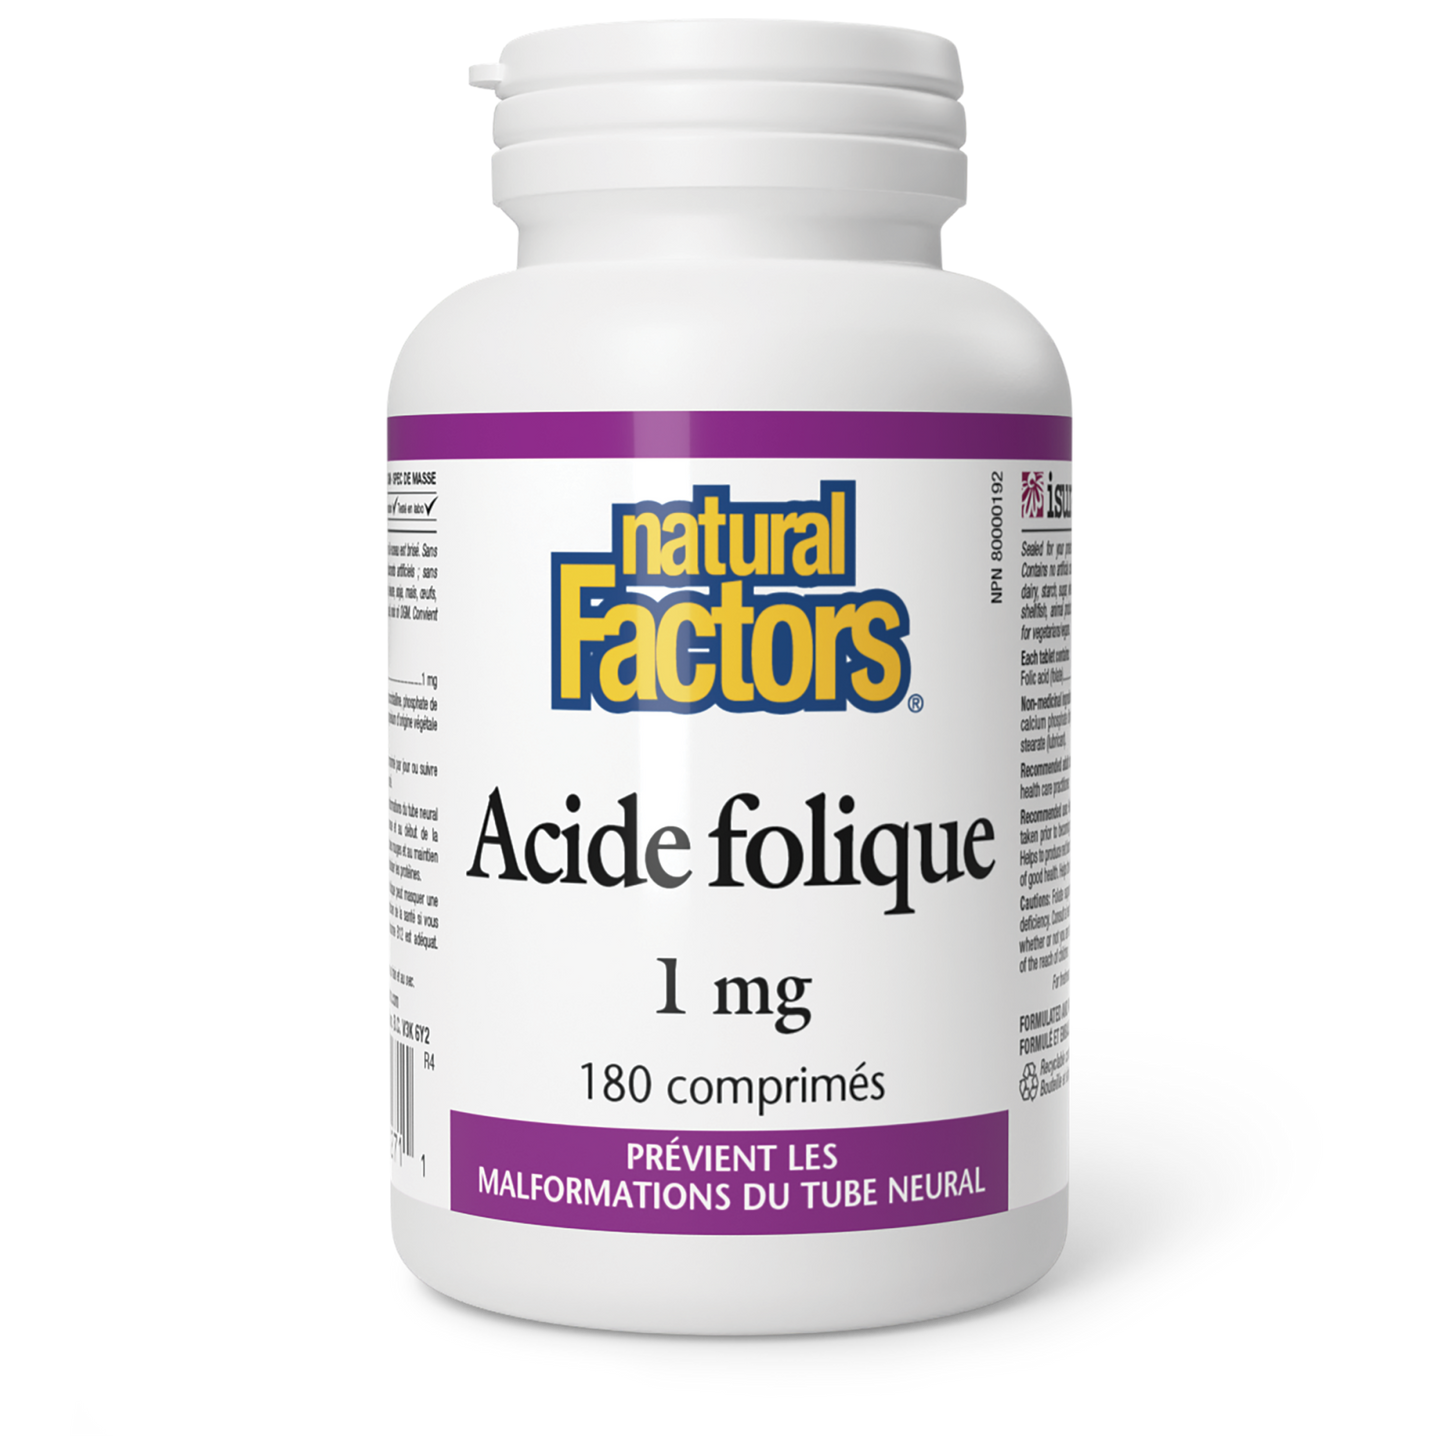 Acide folique 1 mg, Natural Factors|v|image|1271